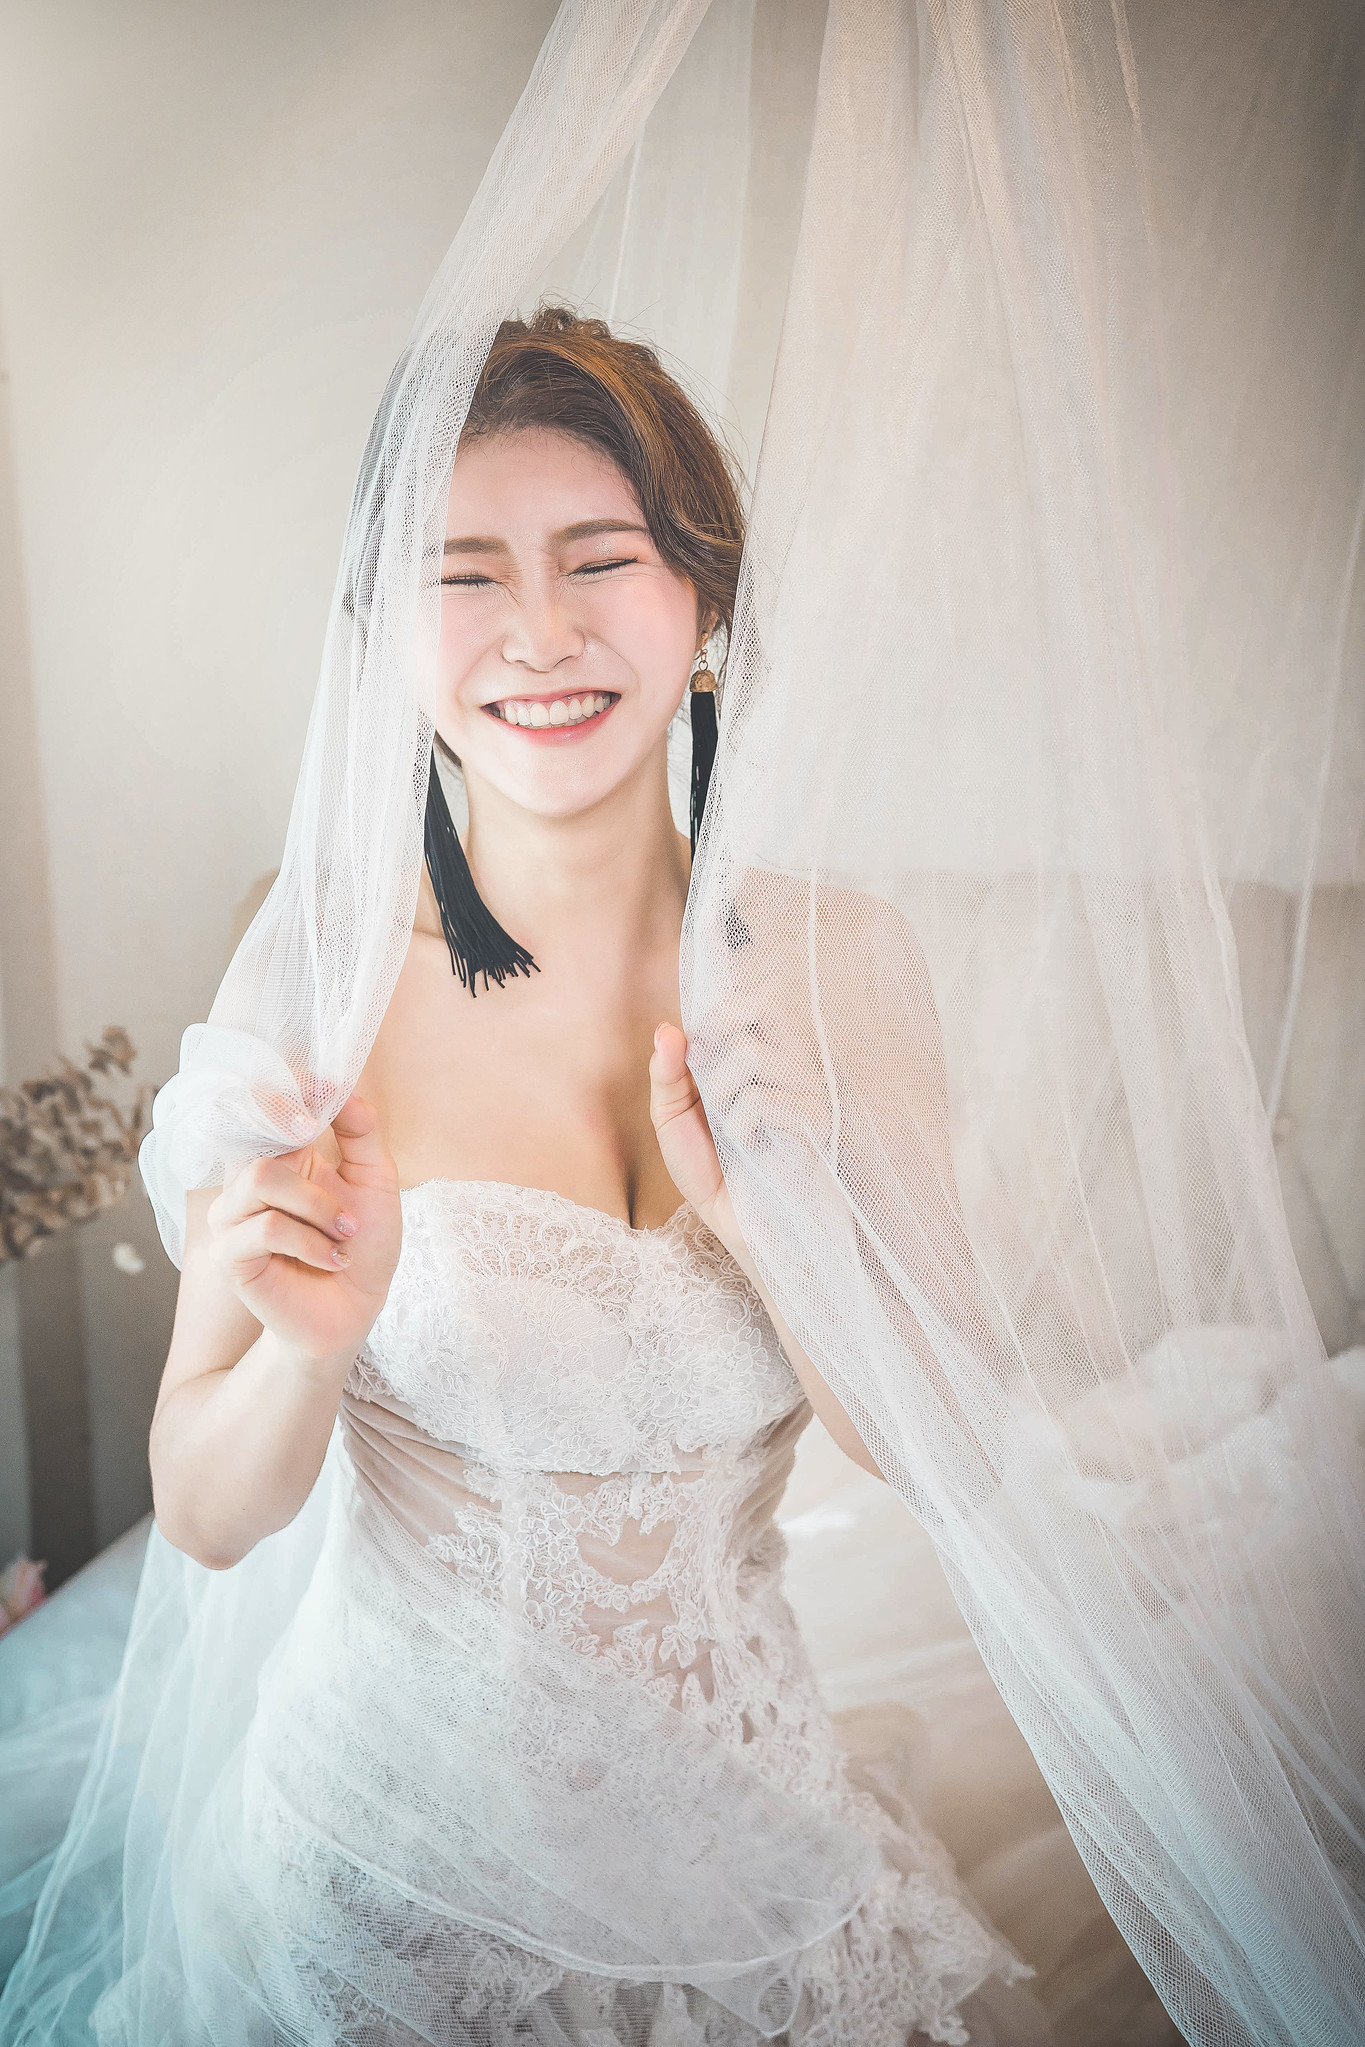 Asian Women Model Brides Smiling Women Indoors Indoors Closed Eyes Dress White Dress White Clothing 1365x2047